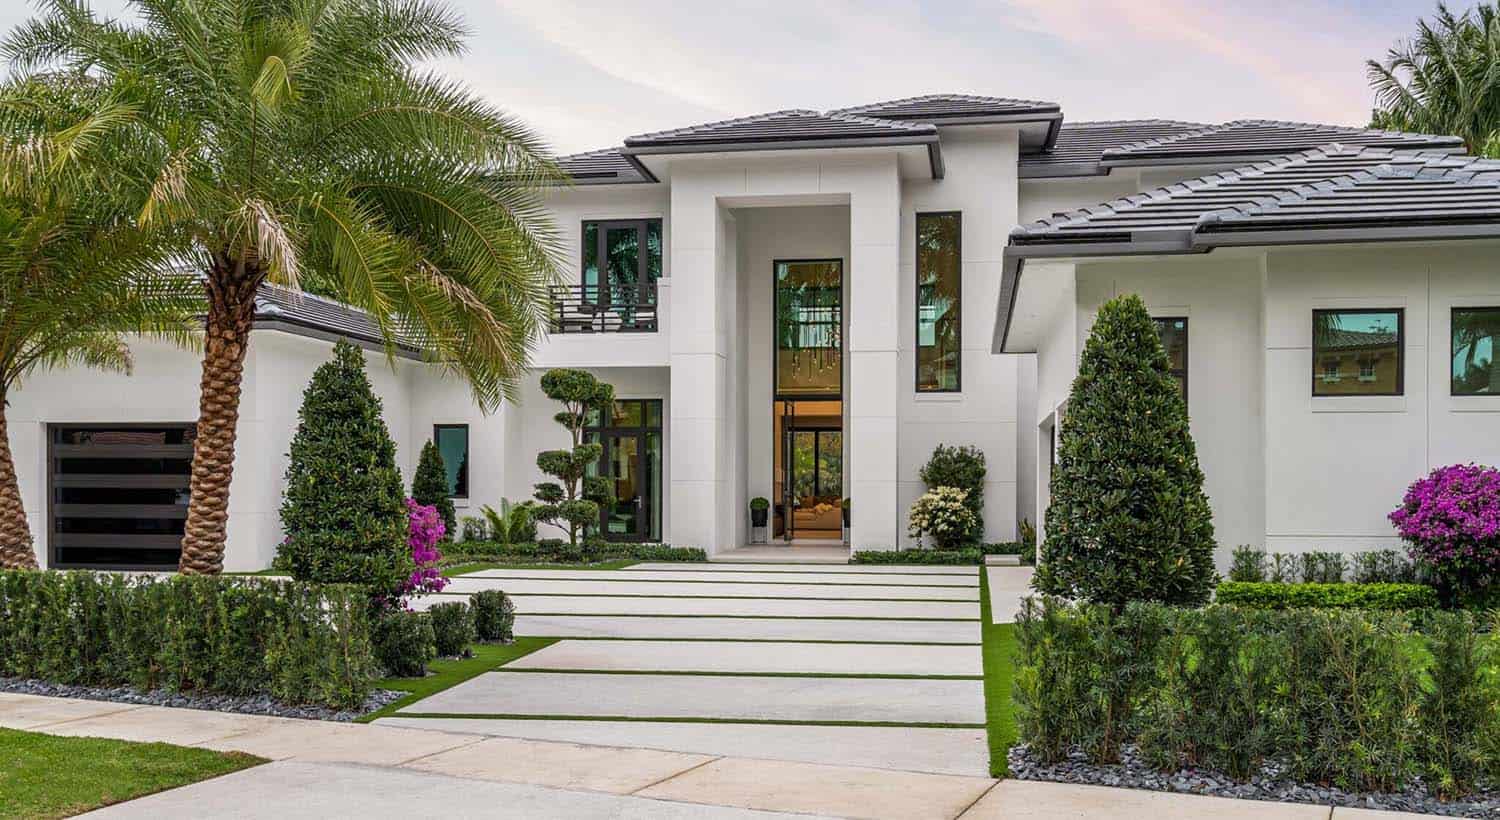 California modern style home exterior